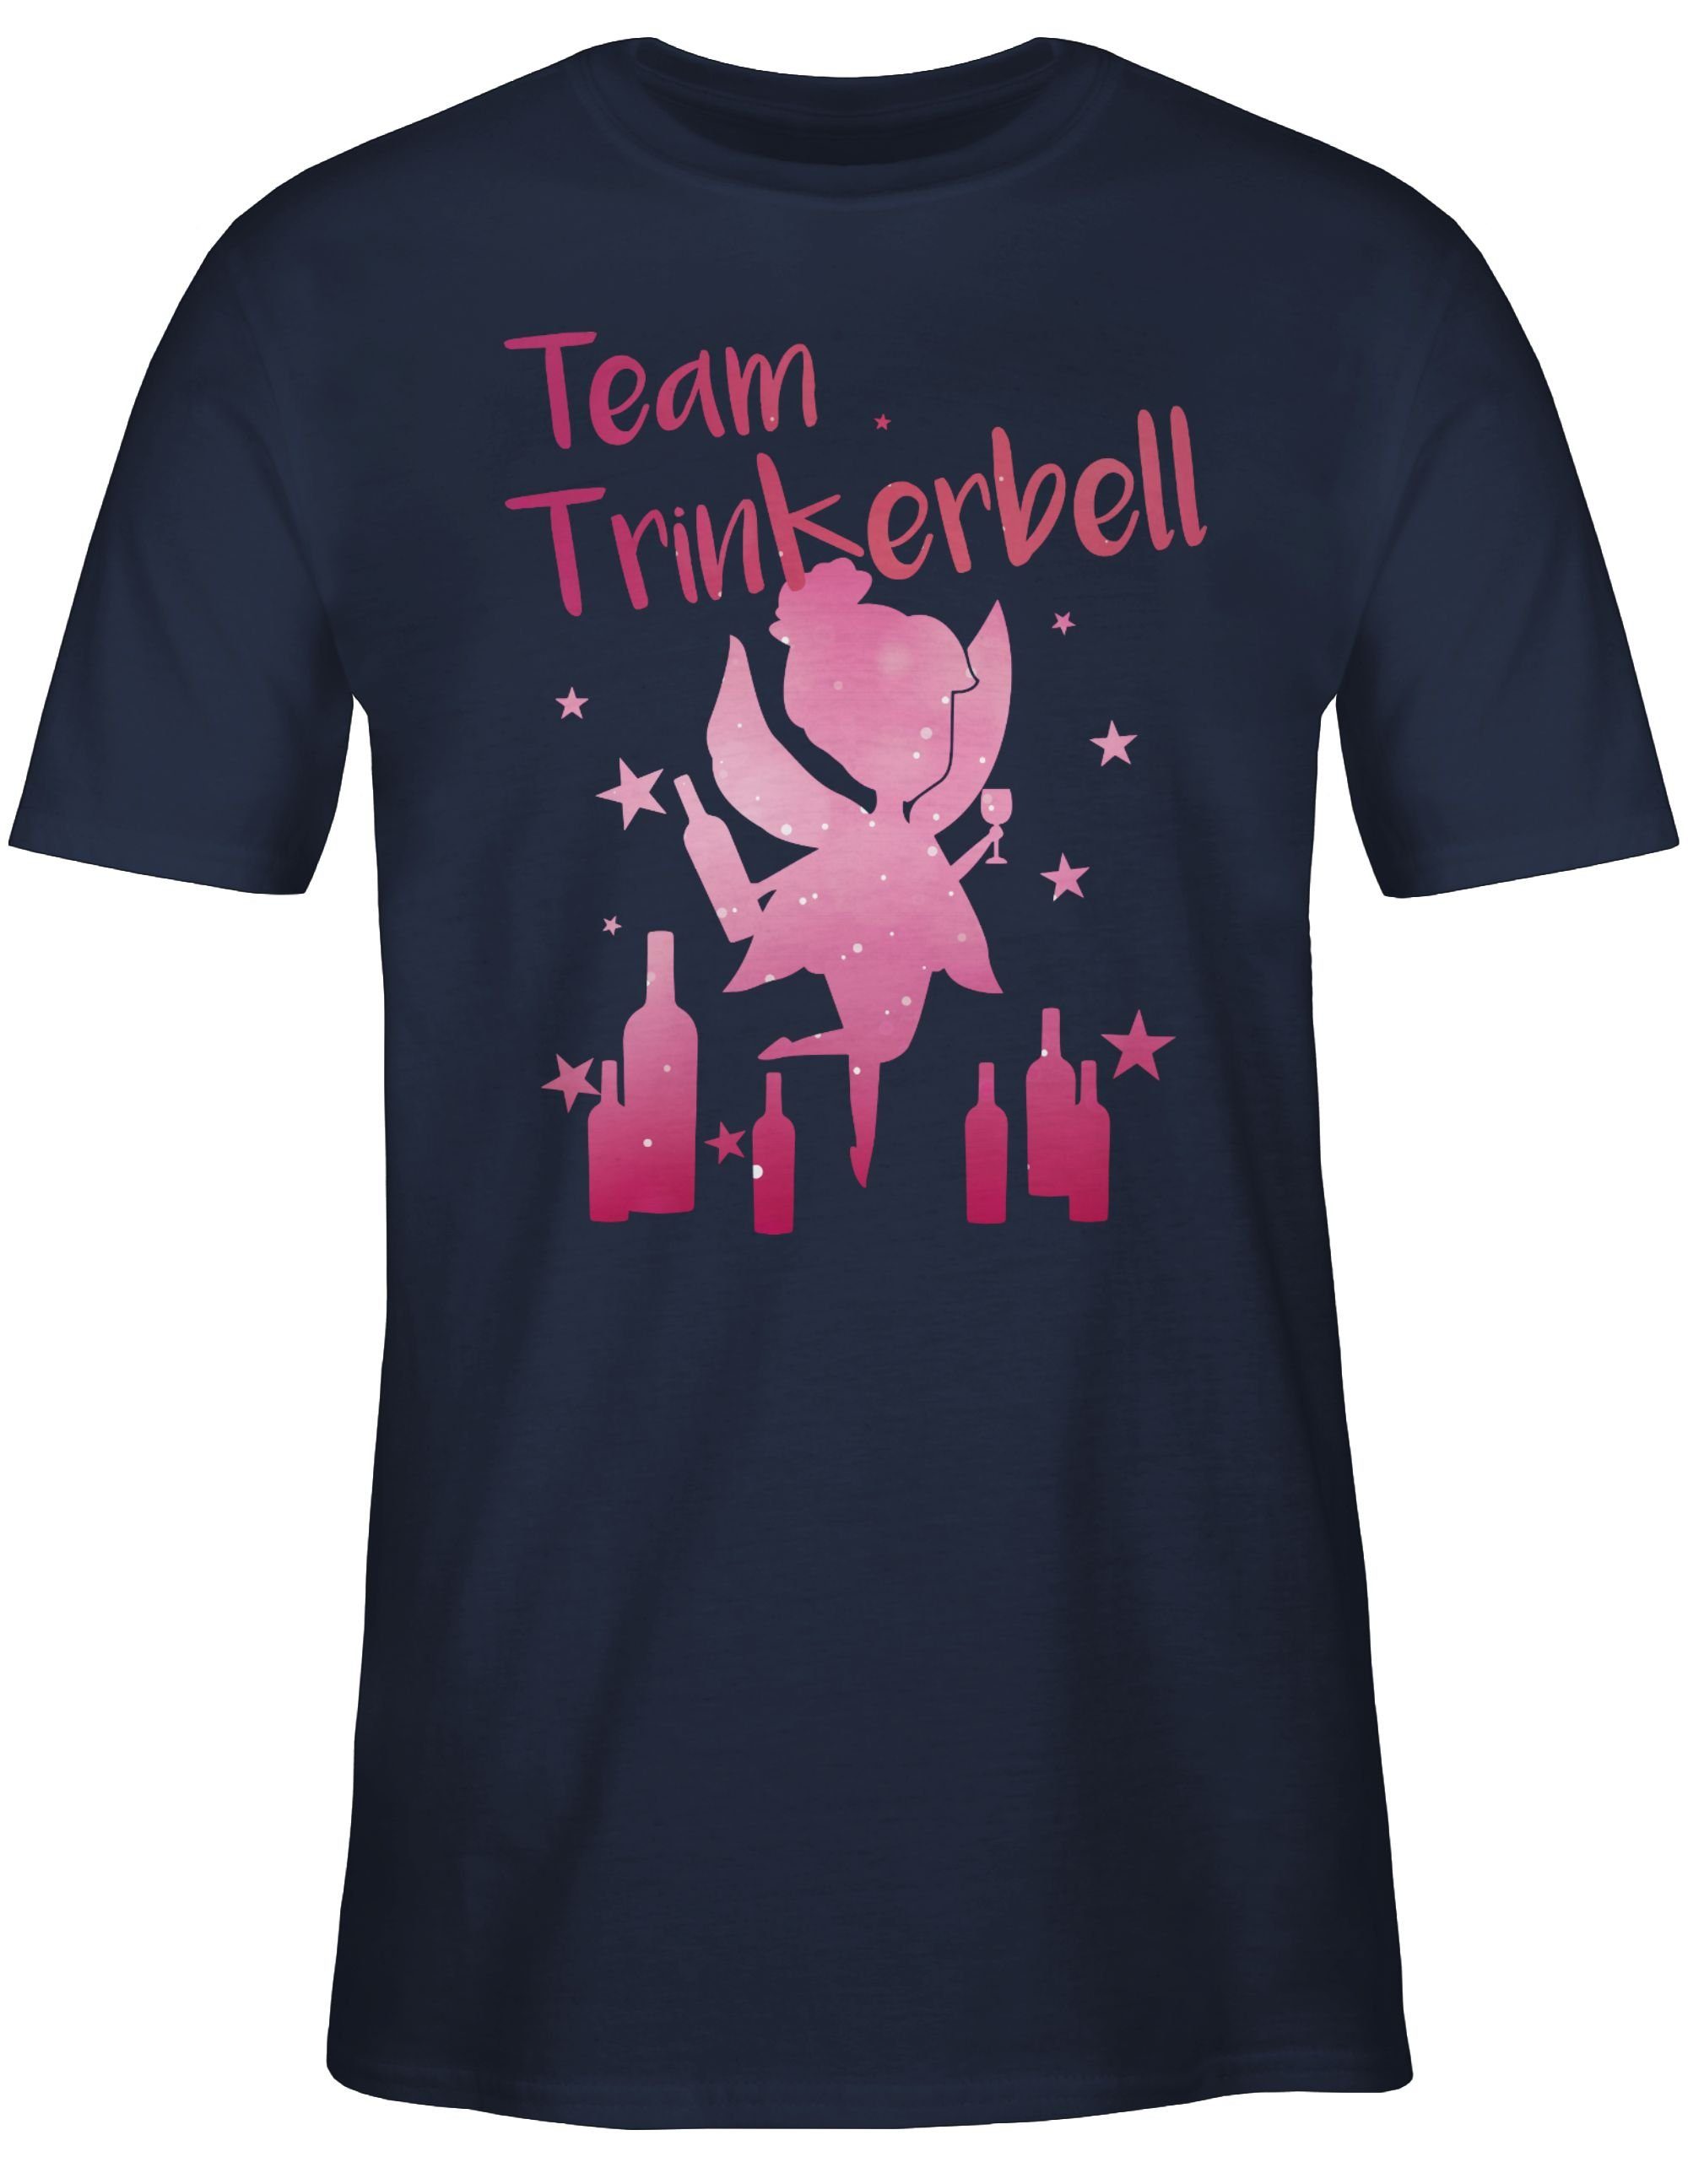 Shirtracer Team Blau 02 Karneval T-Shirt Outfit Trinkerbell Navy